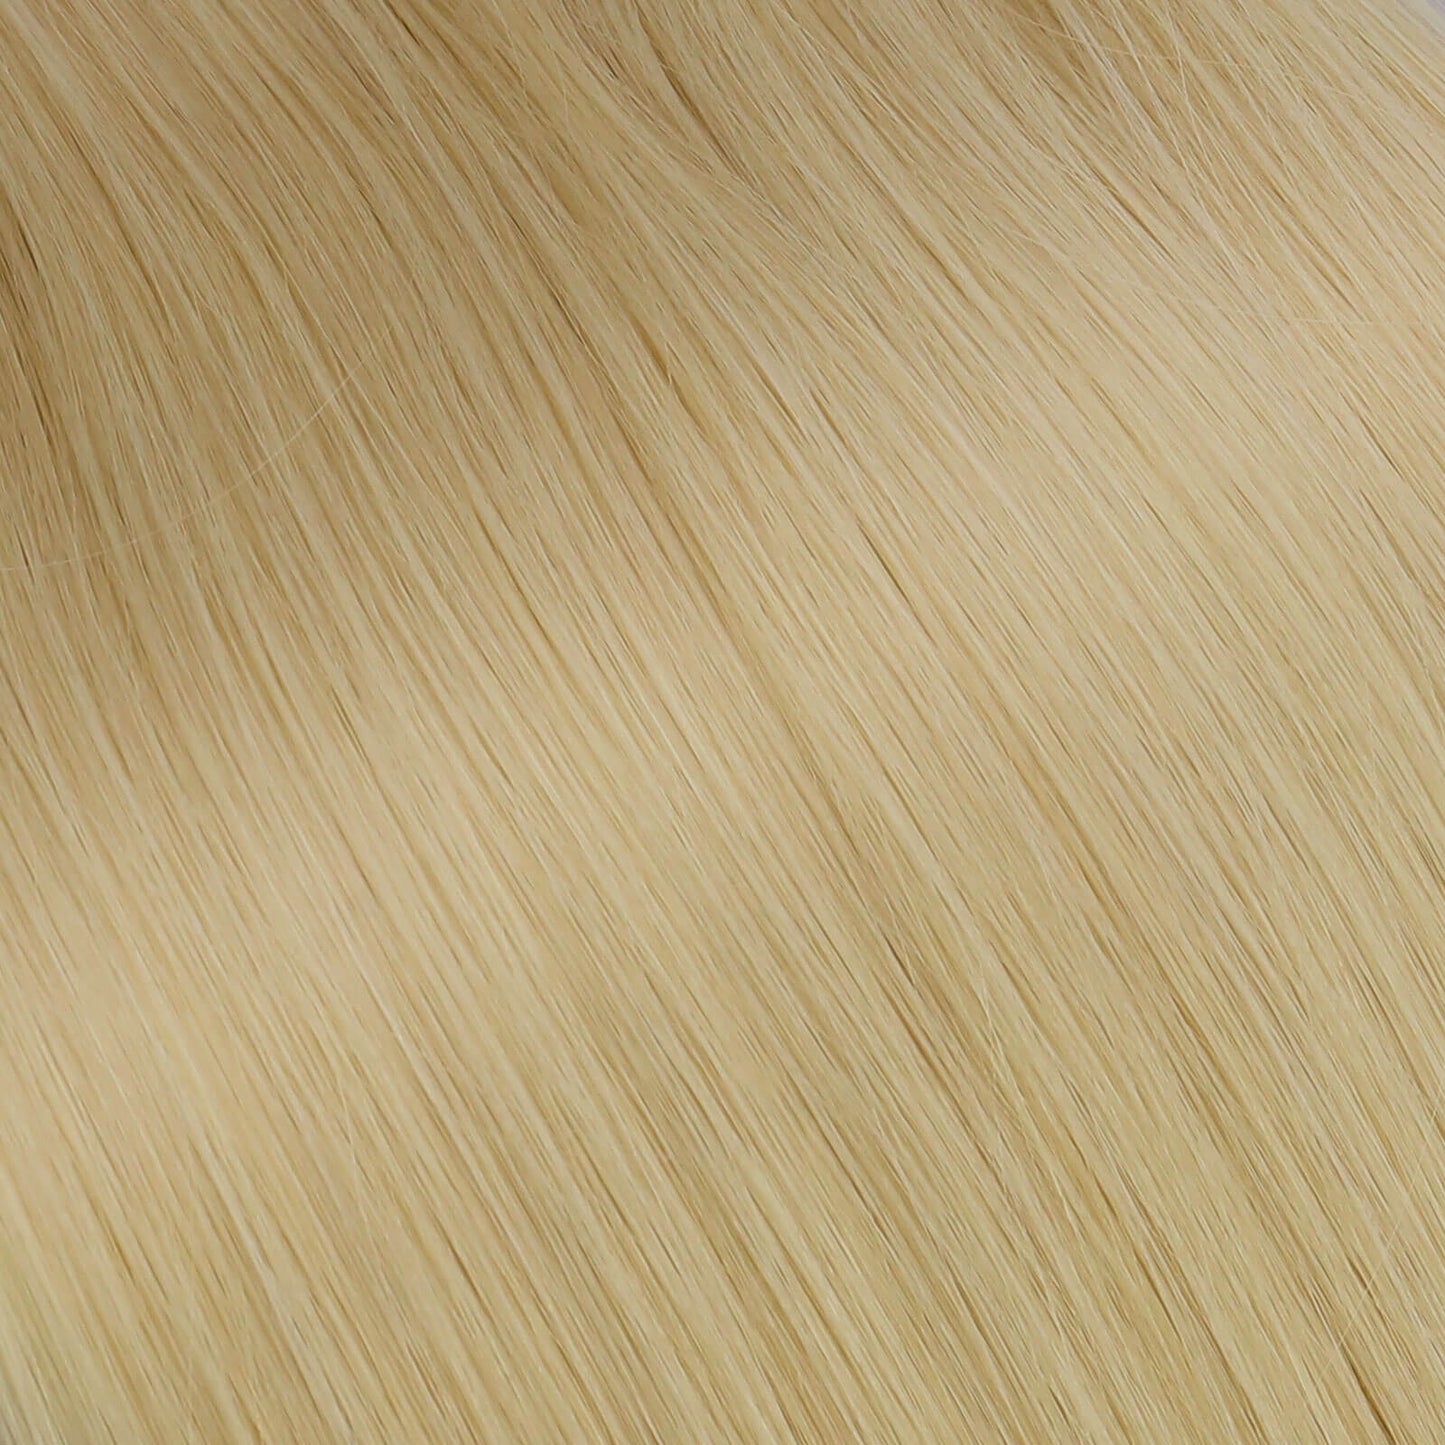 blonde customize virgin hair extensions